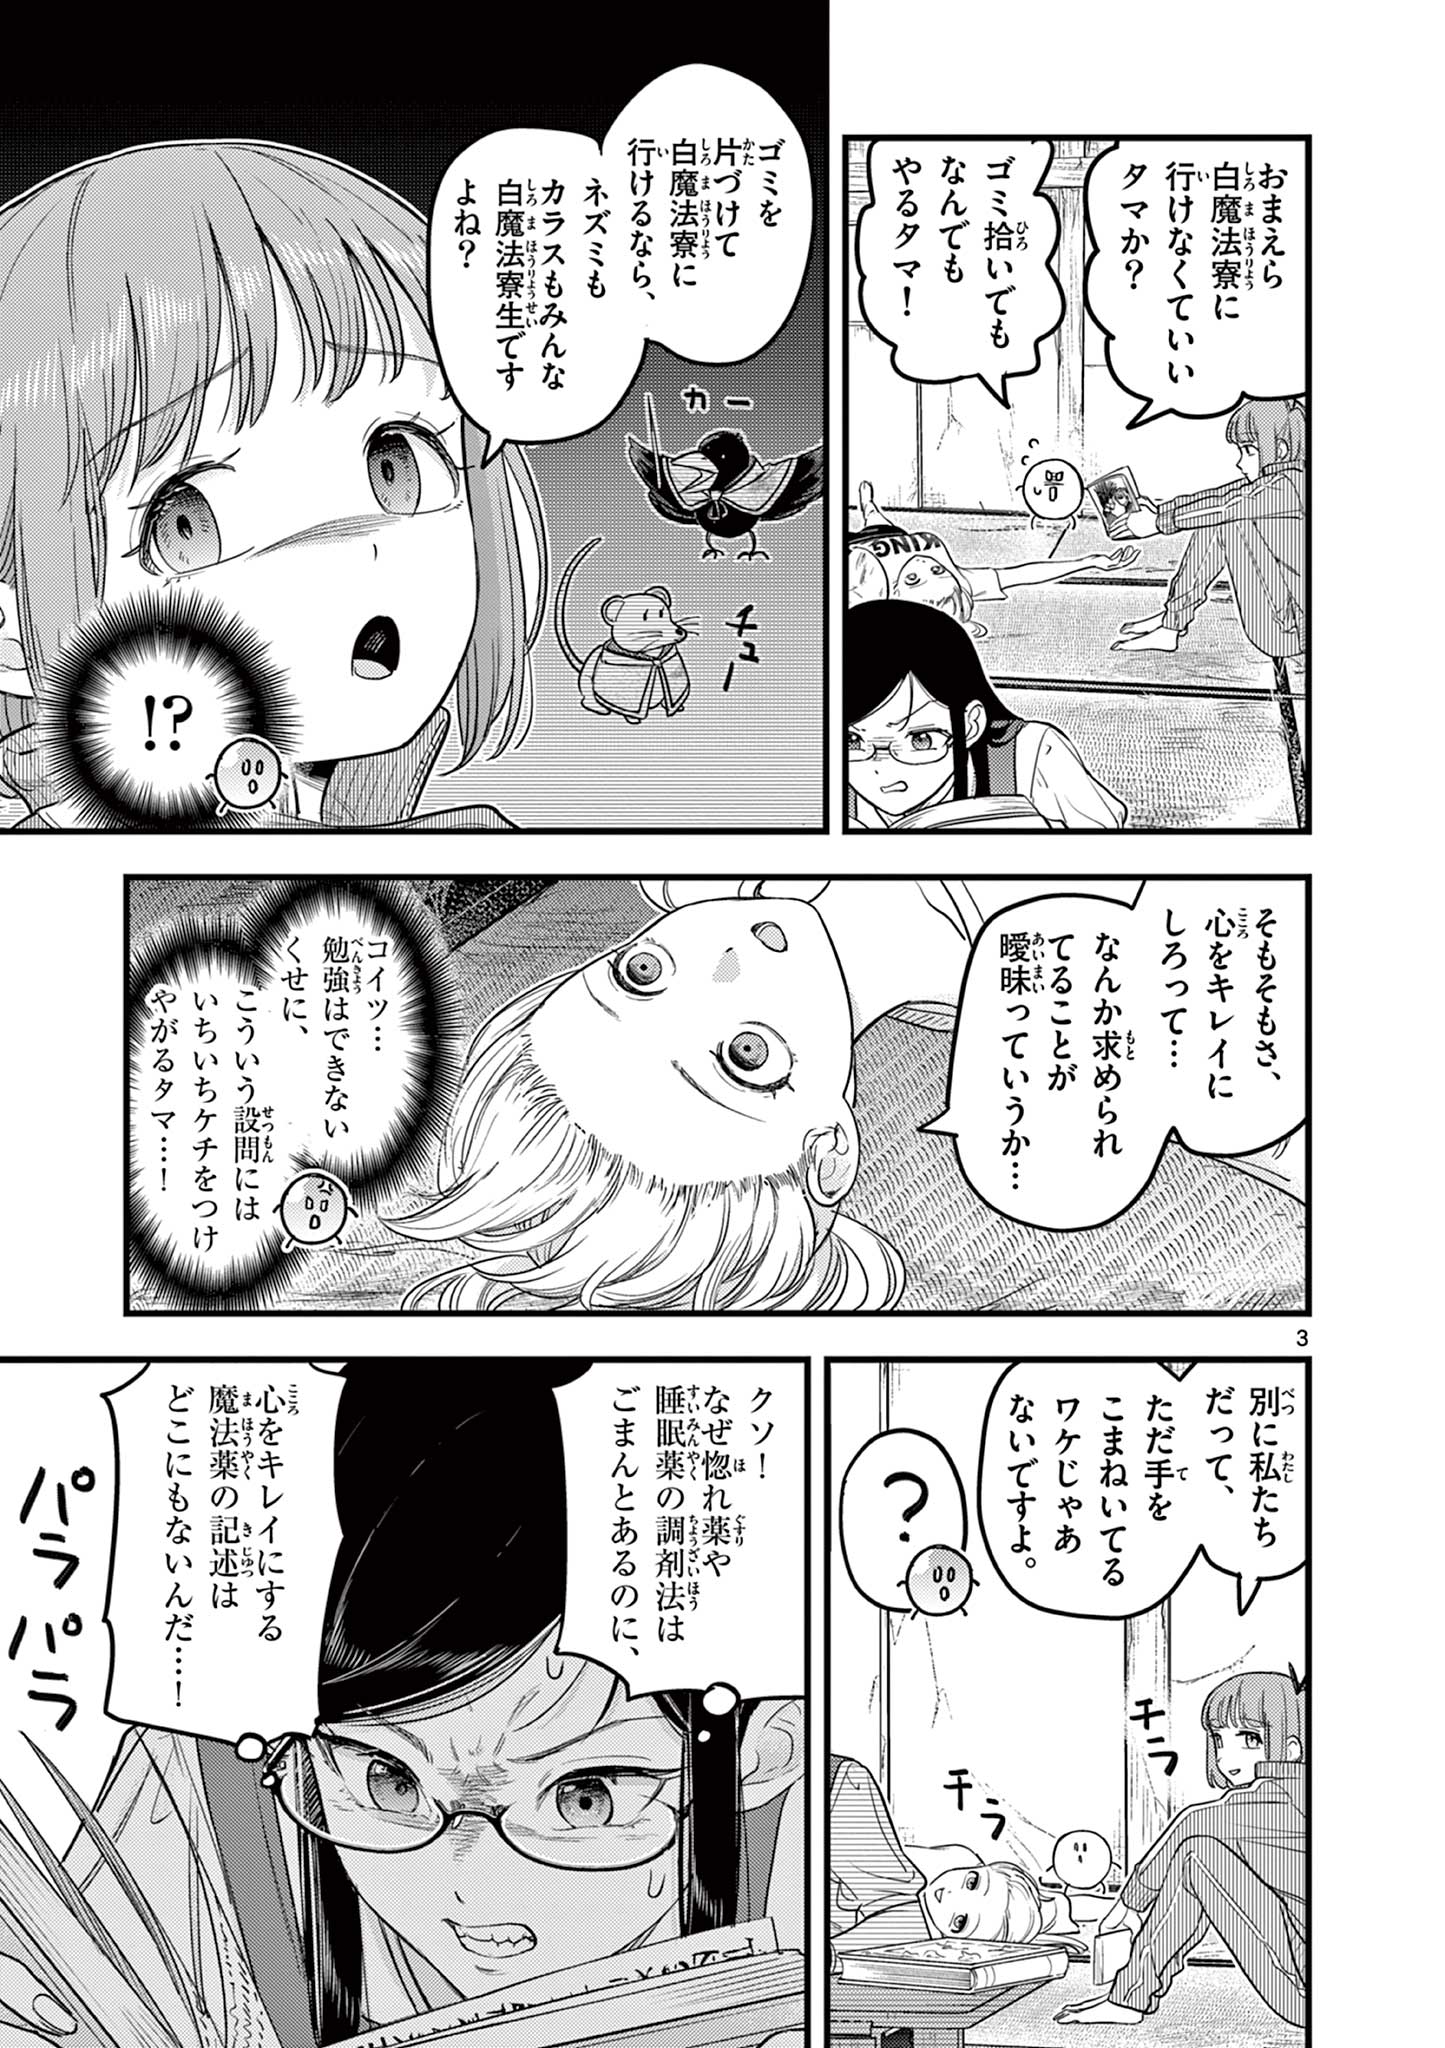 Kuro Mahou Ryou no Sanakunin - Chapter 13 - Page 3